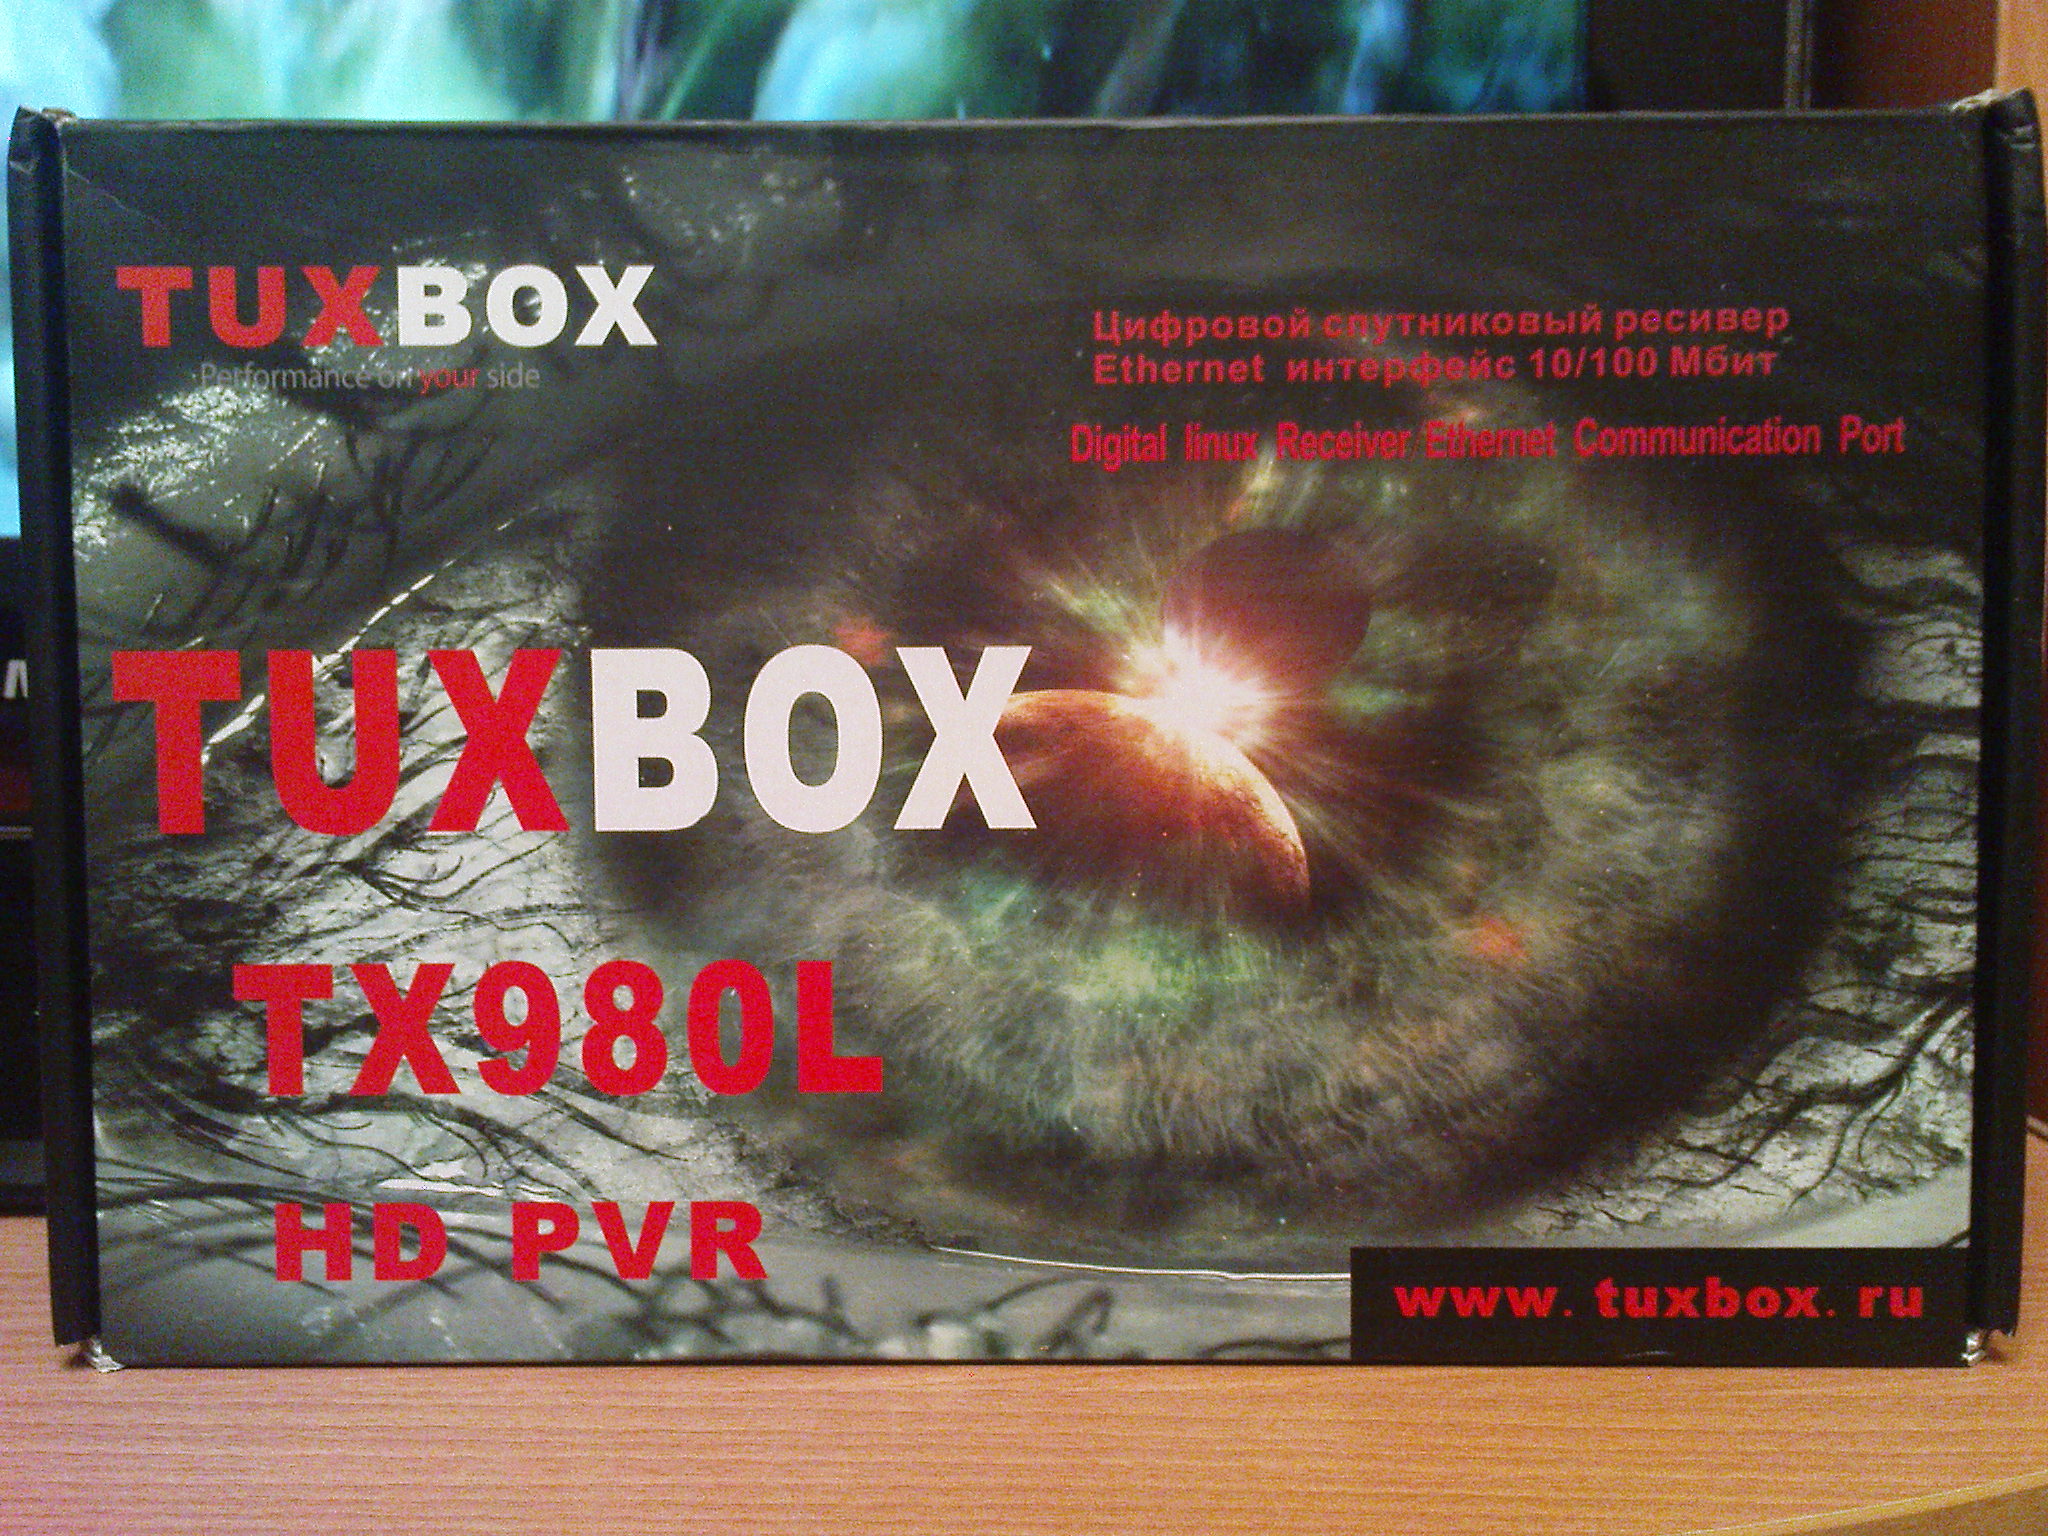 Tuxbox 980